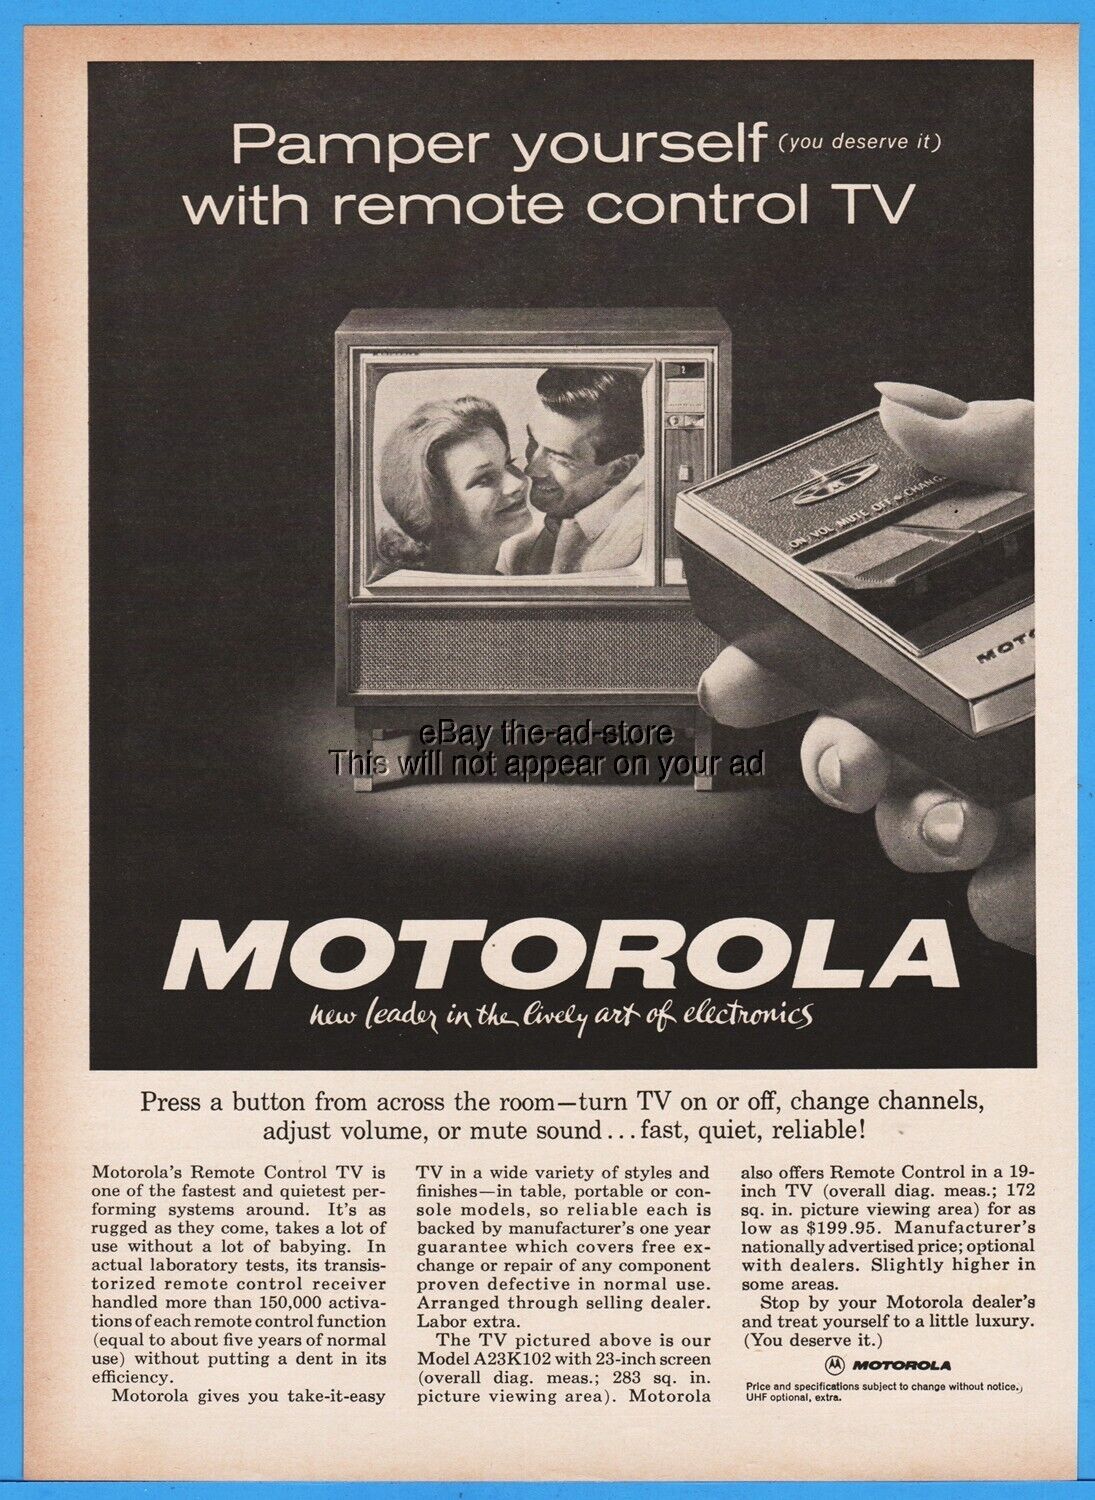 1962 Motorola Model A23K102 Television Remote Control TV Pamper Yourself Ad